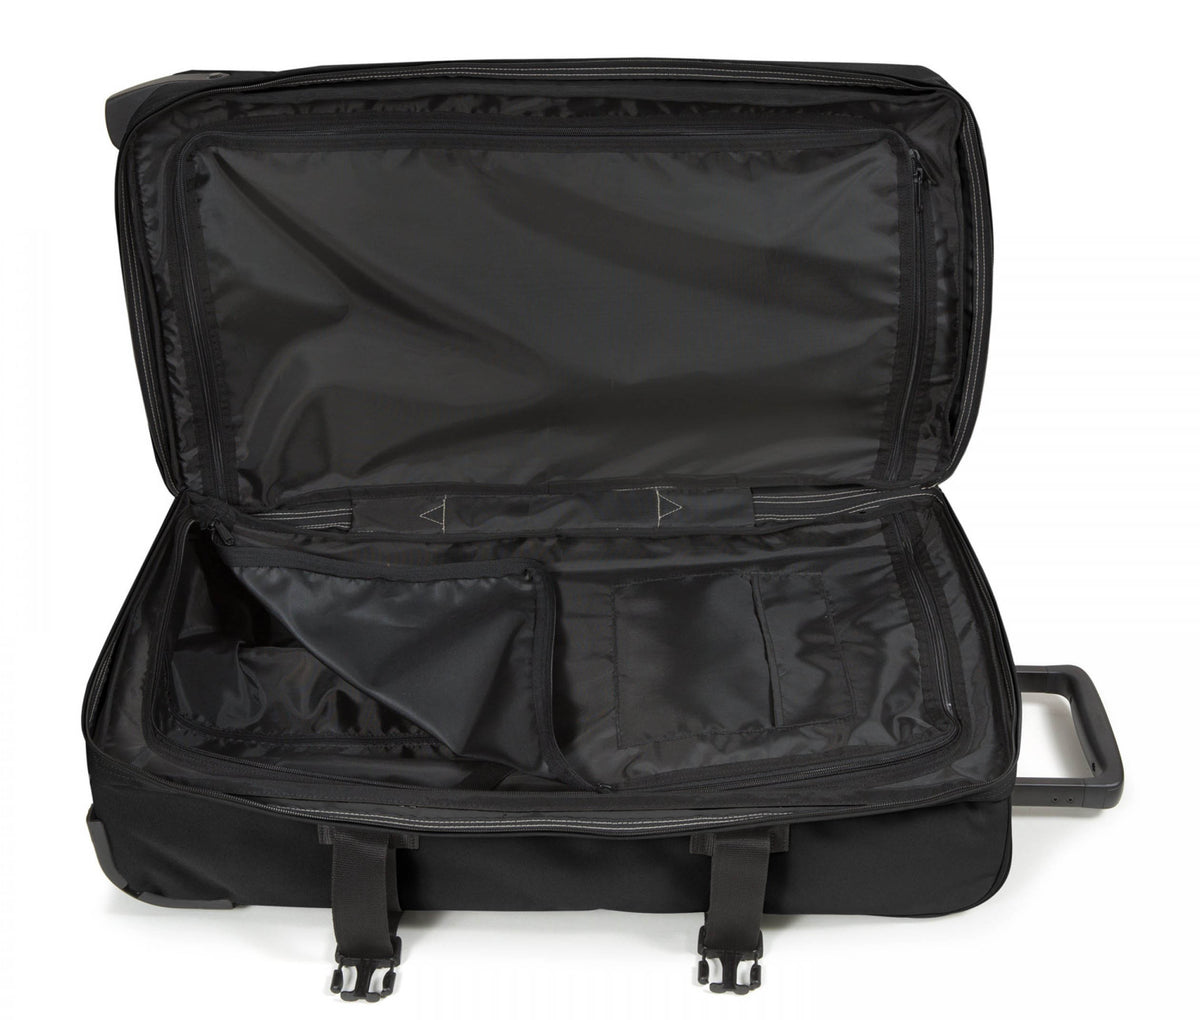 Eastpak Tranverz M Suitcase - Black